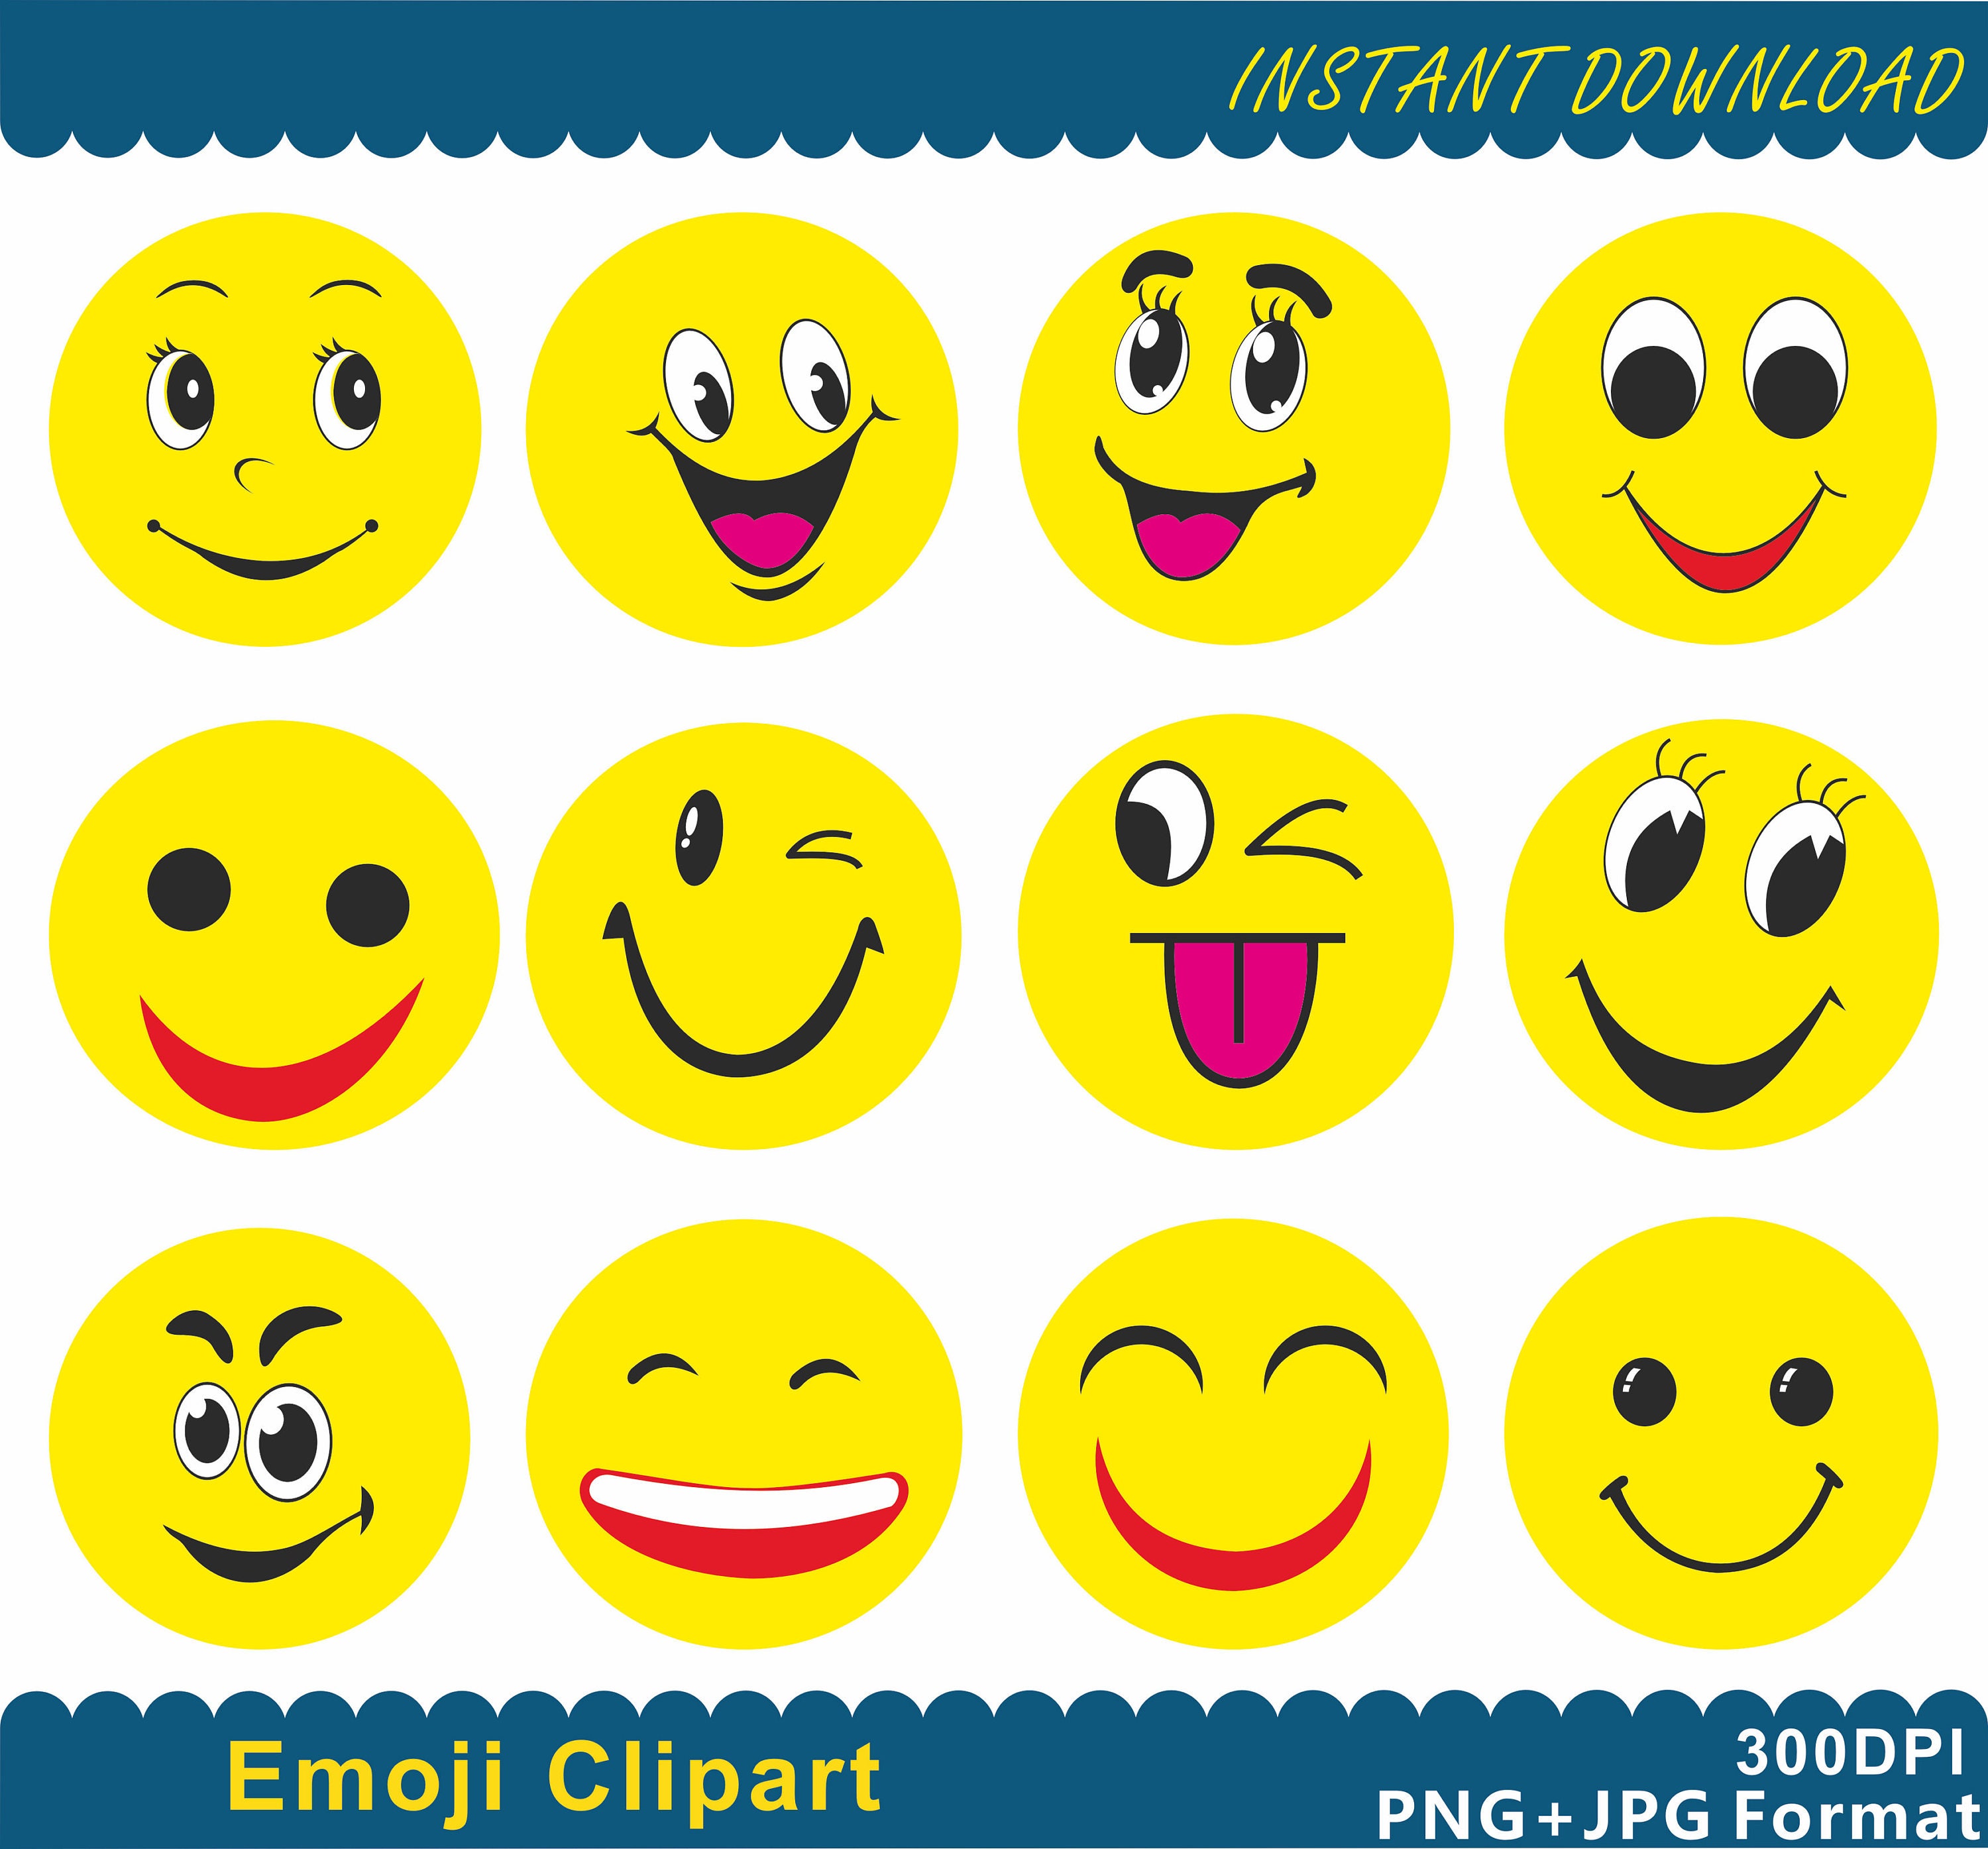 apple emoji clipart - photo #39